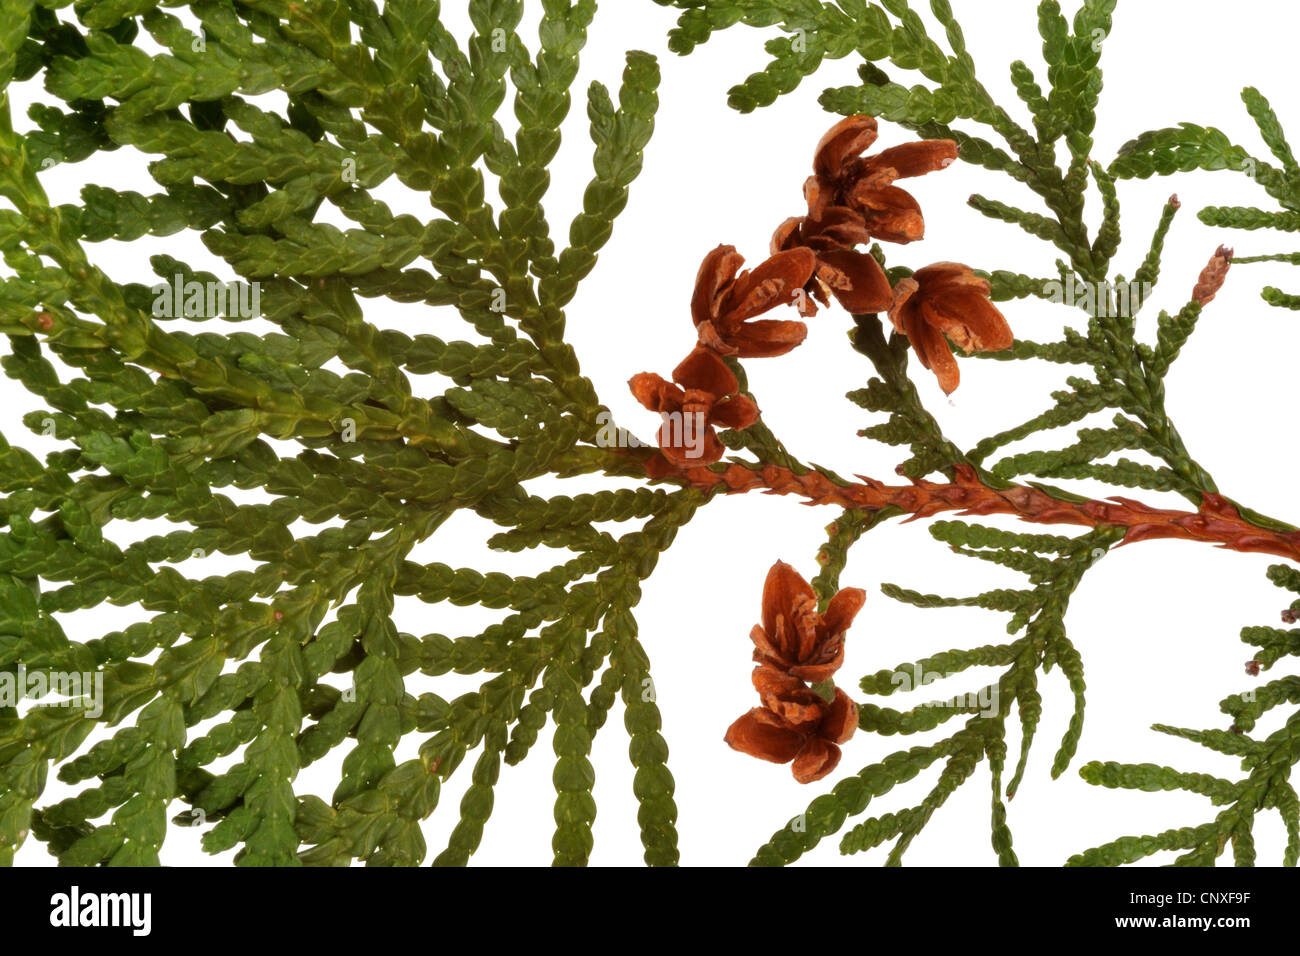 Chinese arbor vitae (Thuja orientalis, Platycladus orientalis), branch with cones Stock Photo